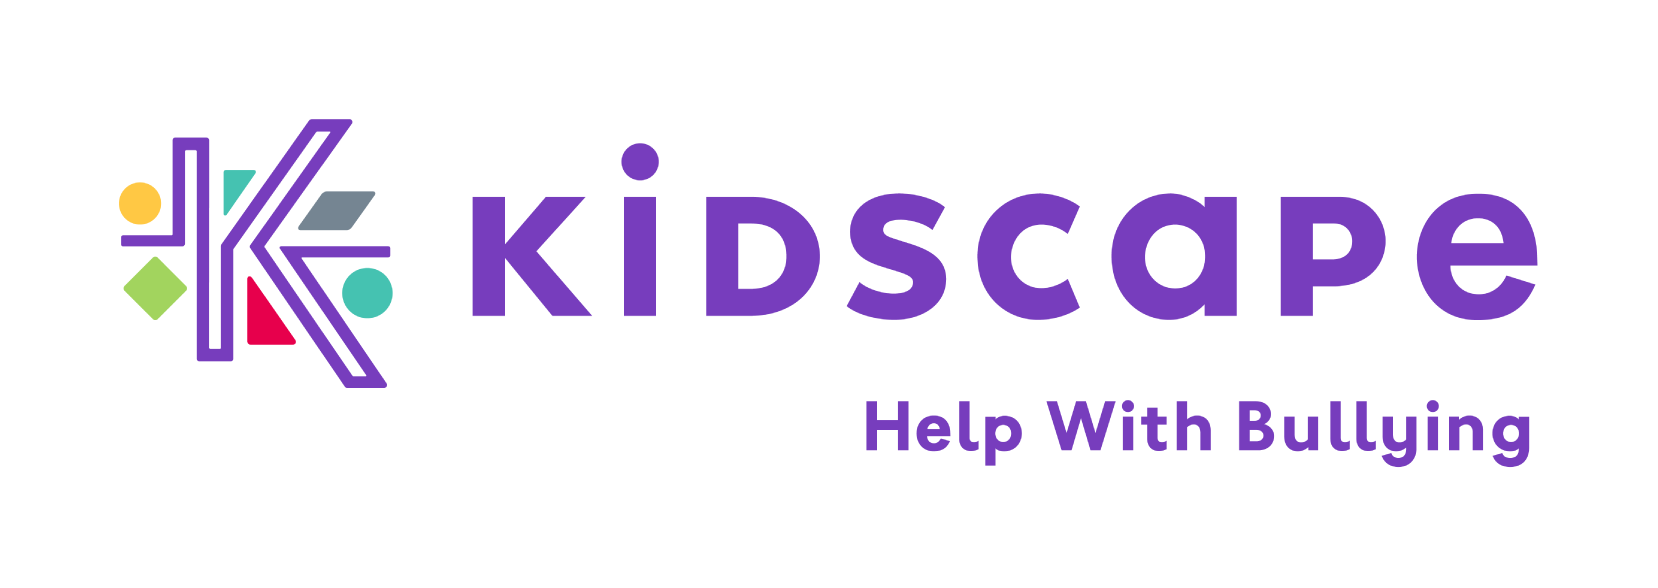 Kidscape logo linking to kidscape site